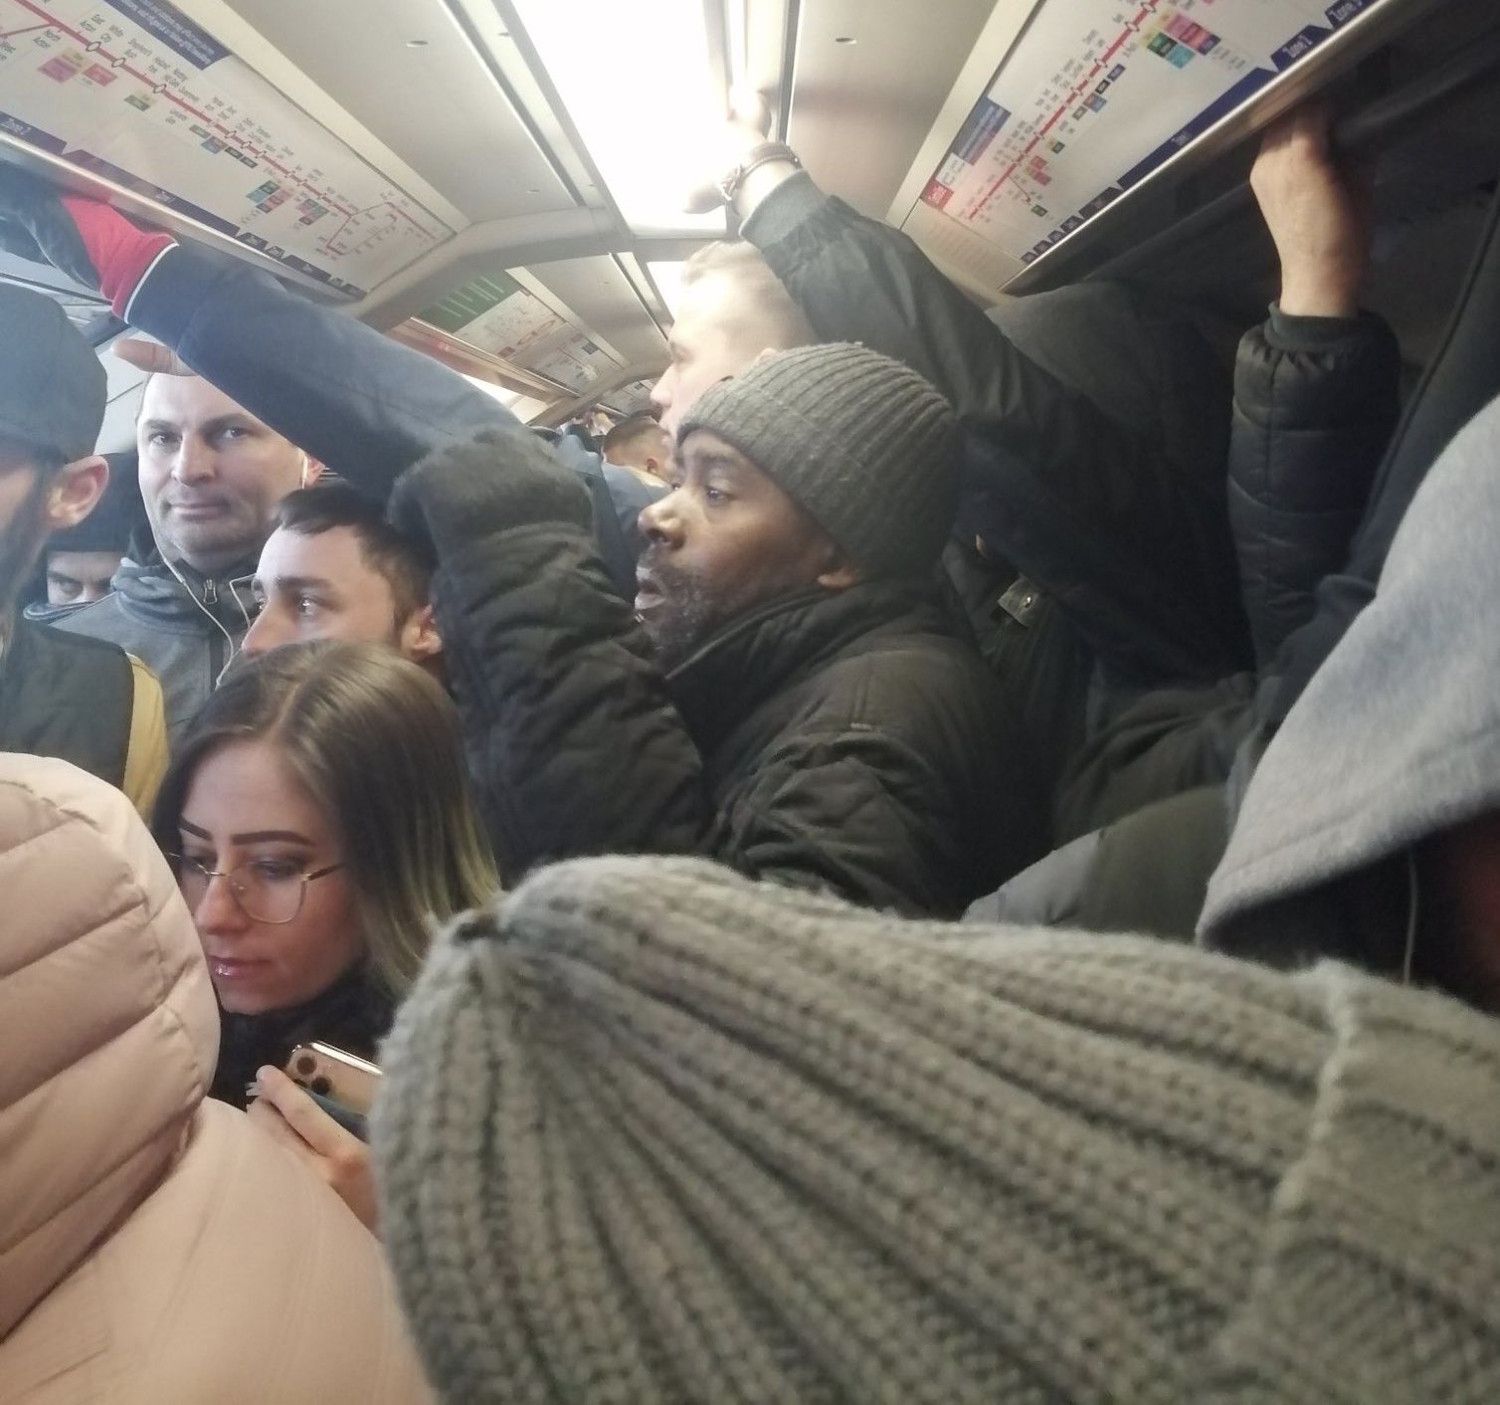 Cramped commuters in London.